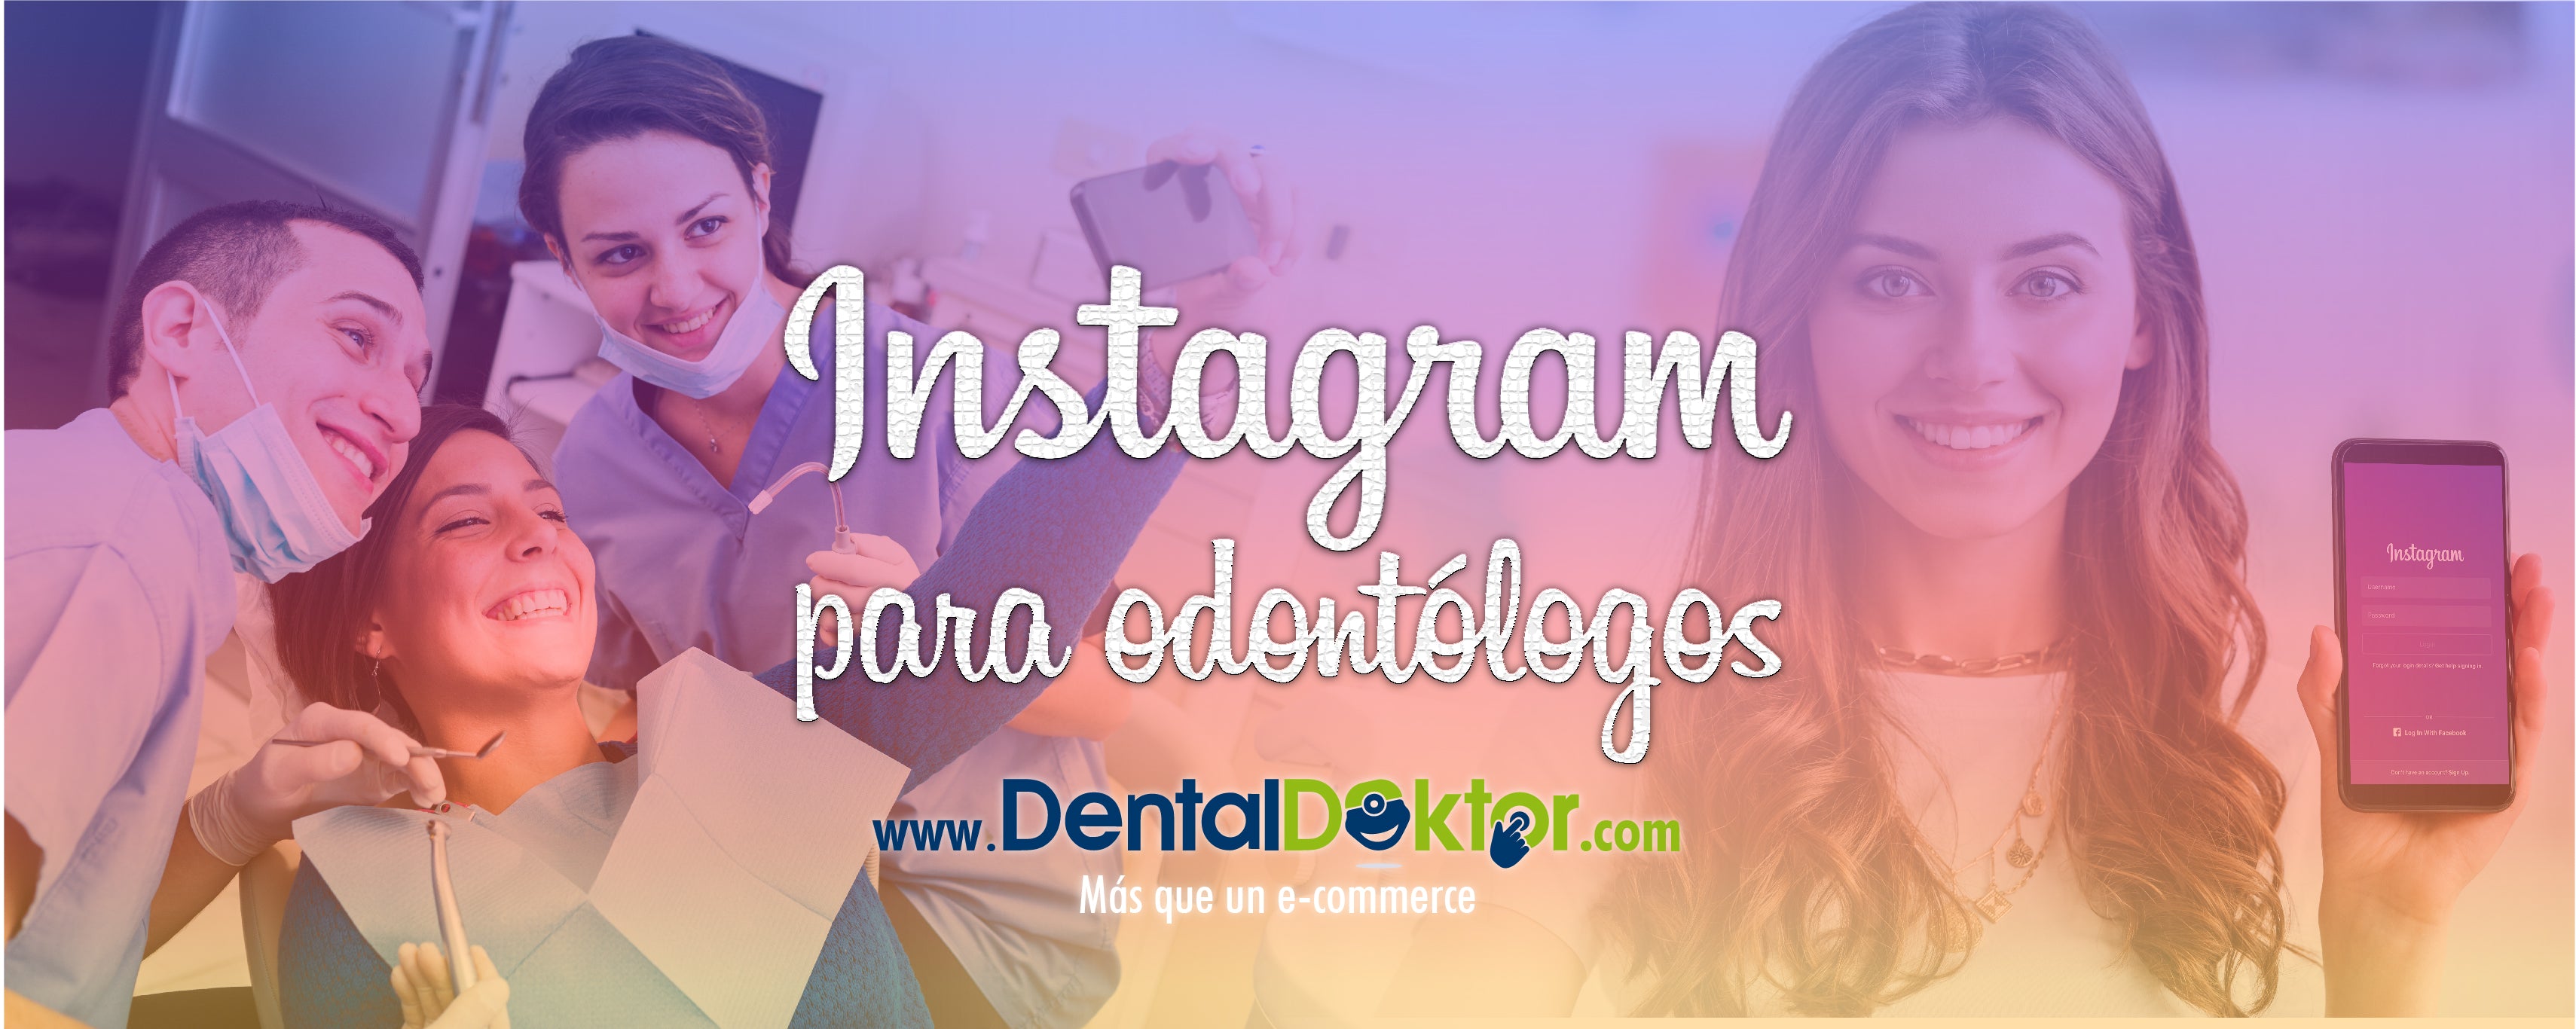 Cómo usar Instagram si eres odontólogo